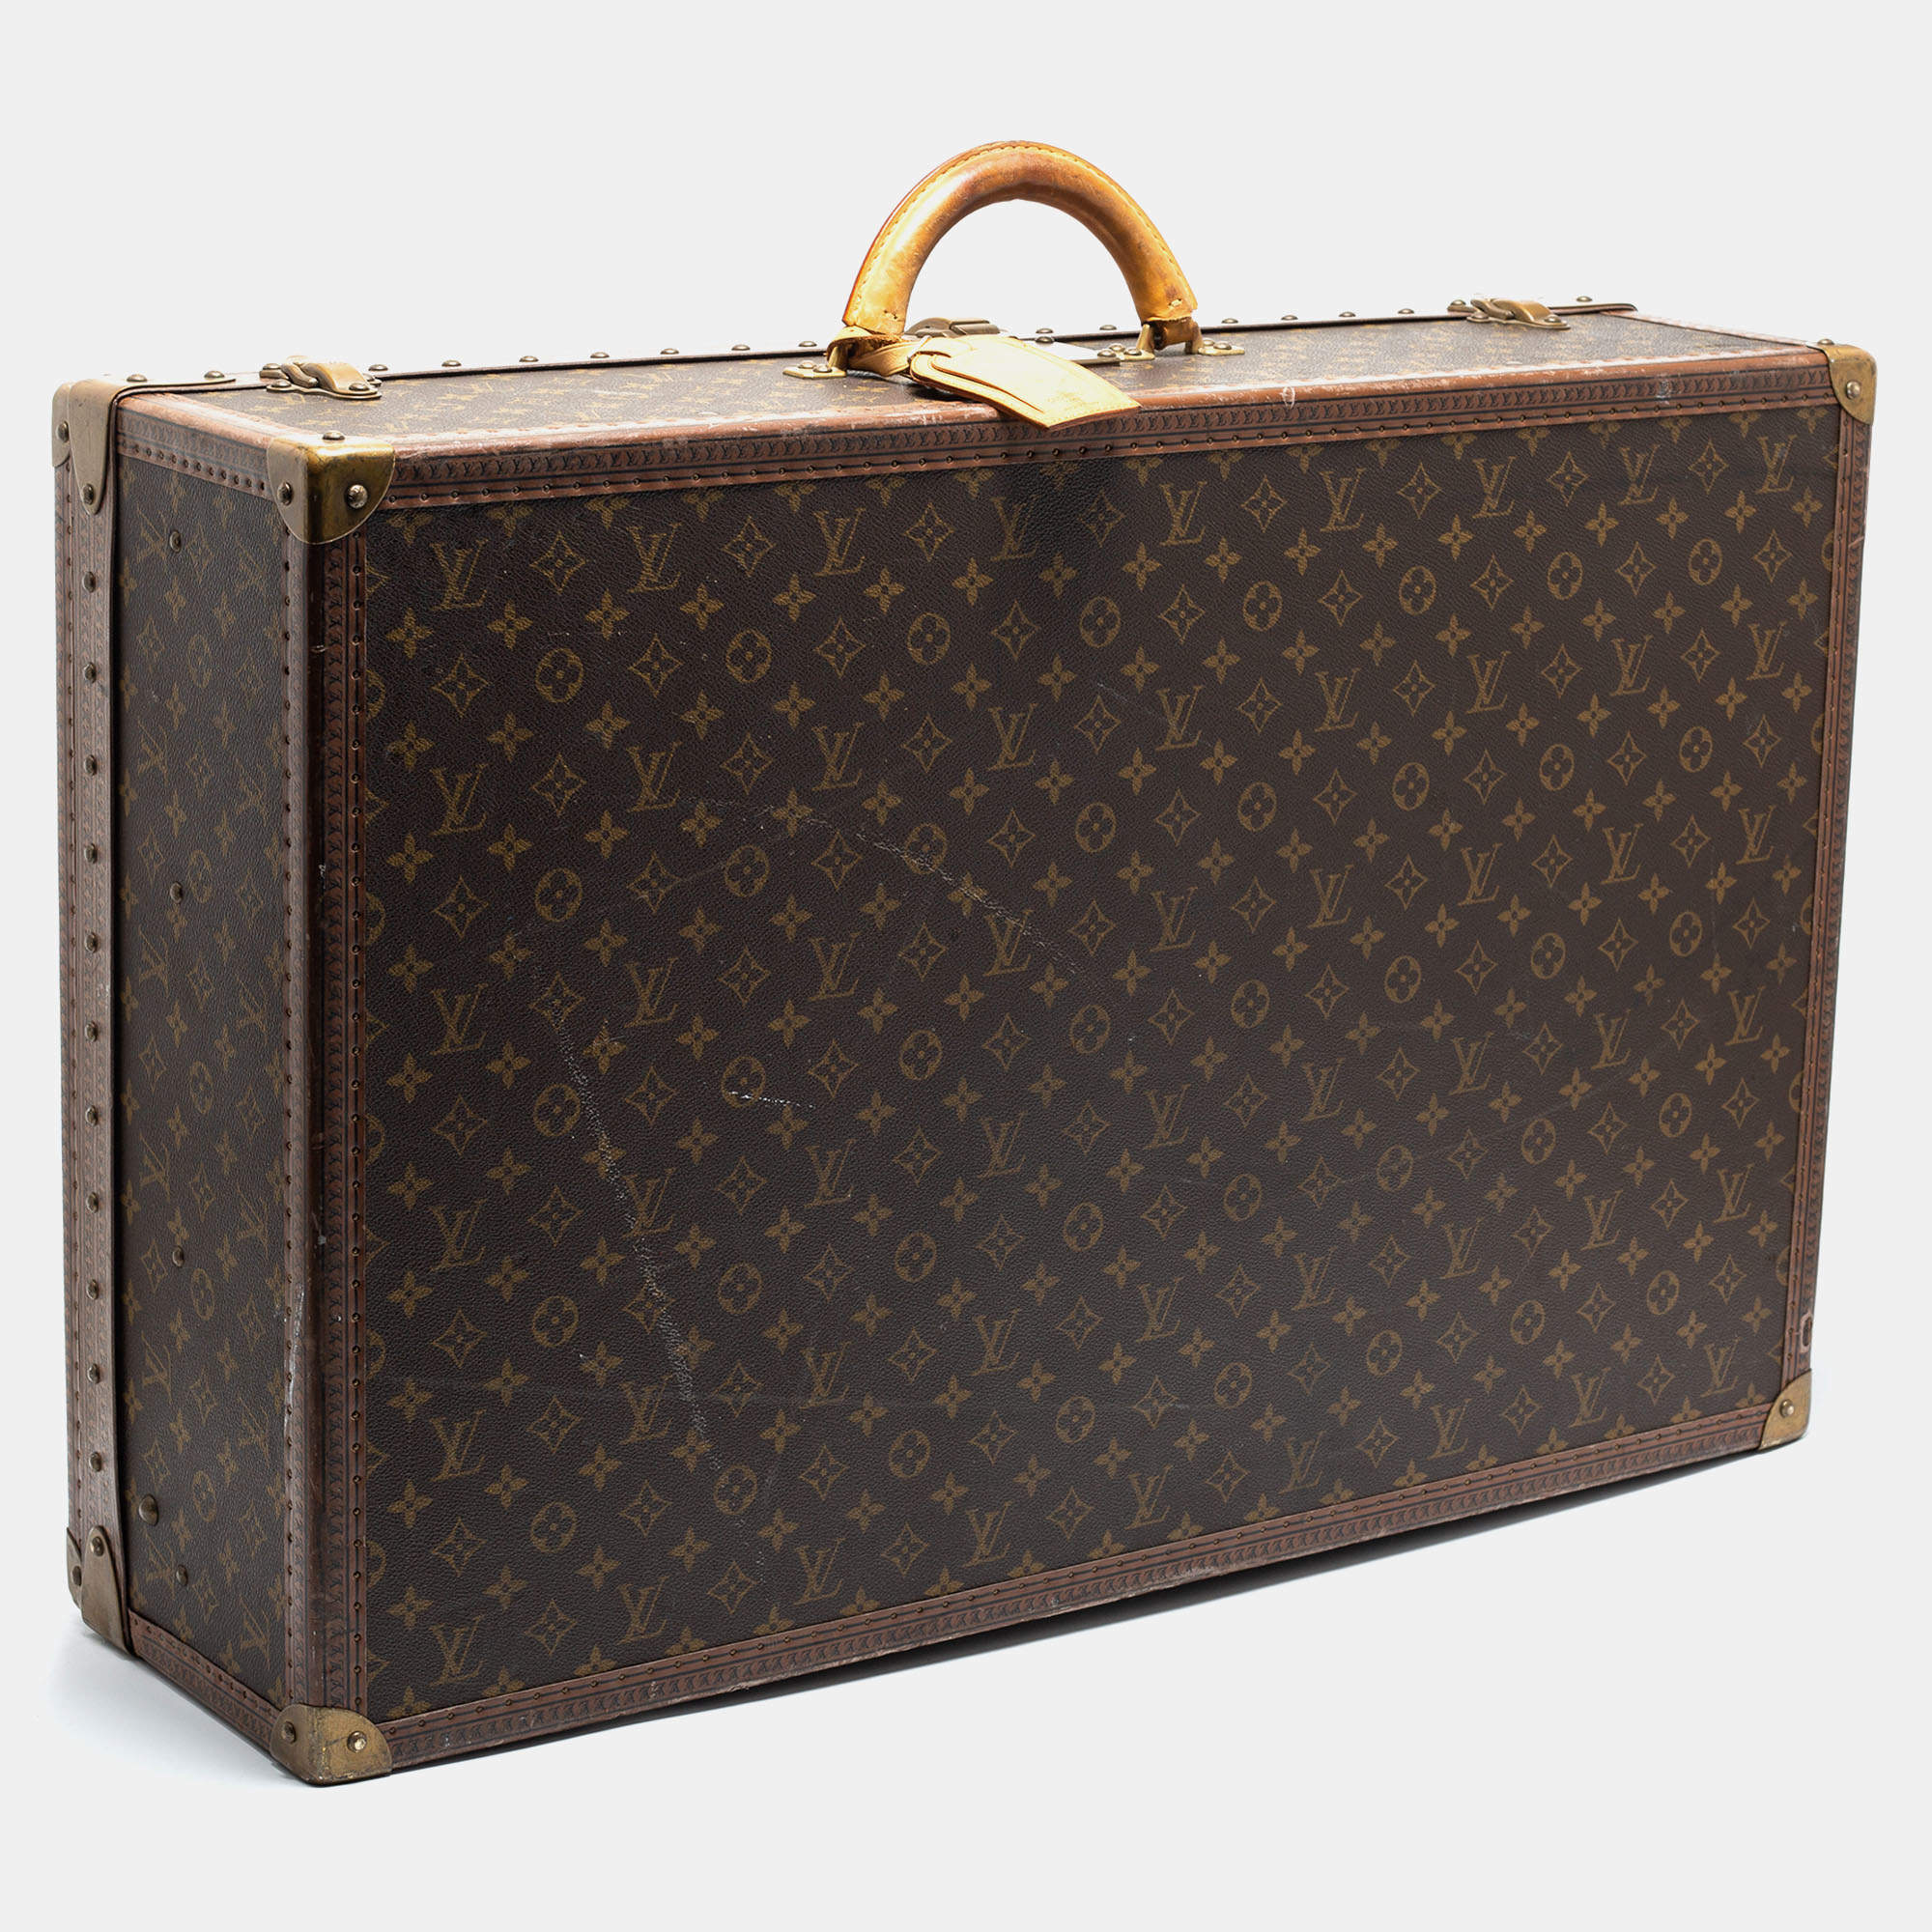 Alzer 75 Trunk Case Travel Bag(Brown)